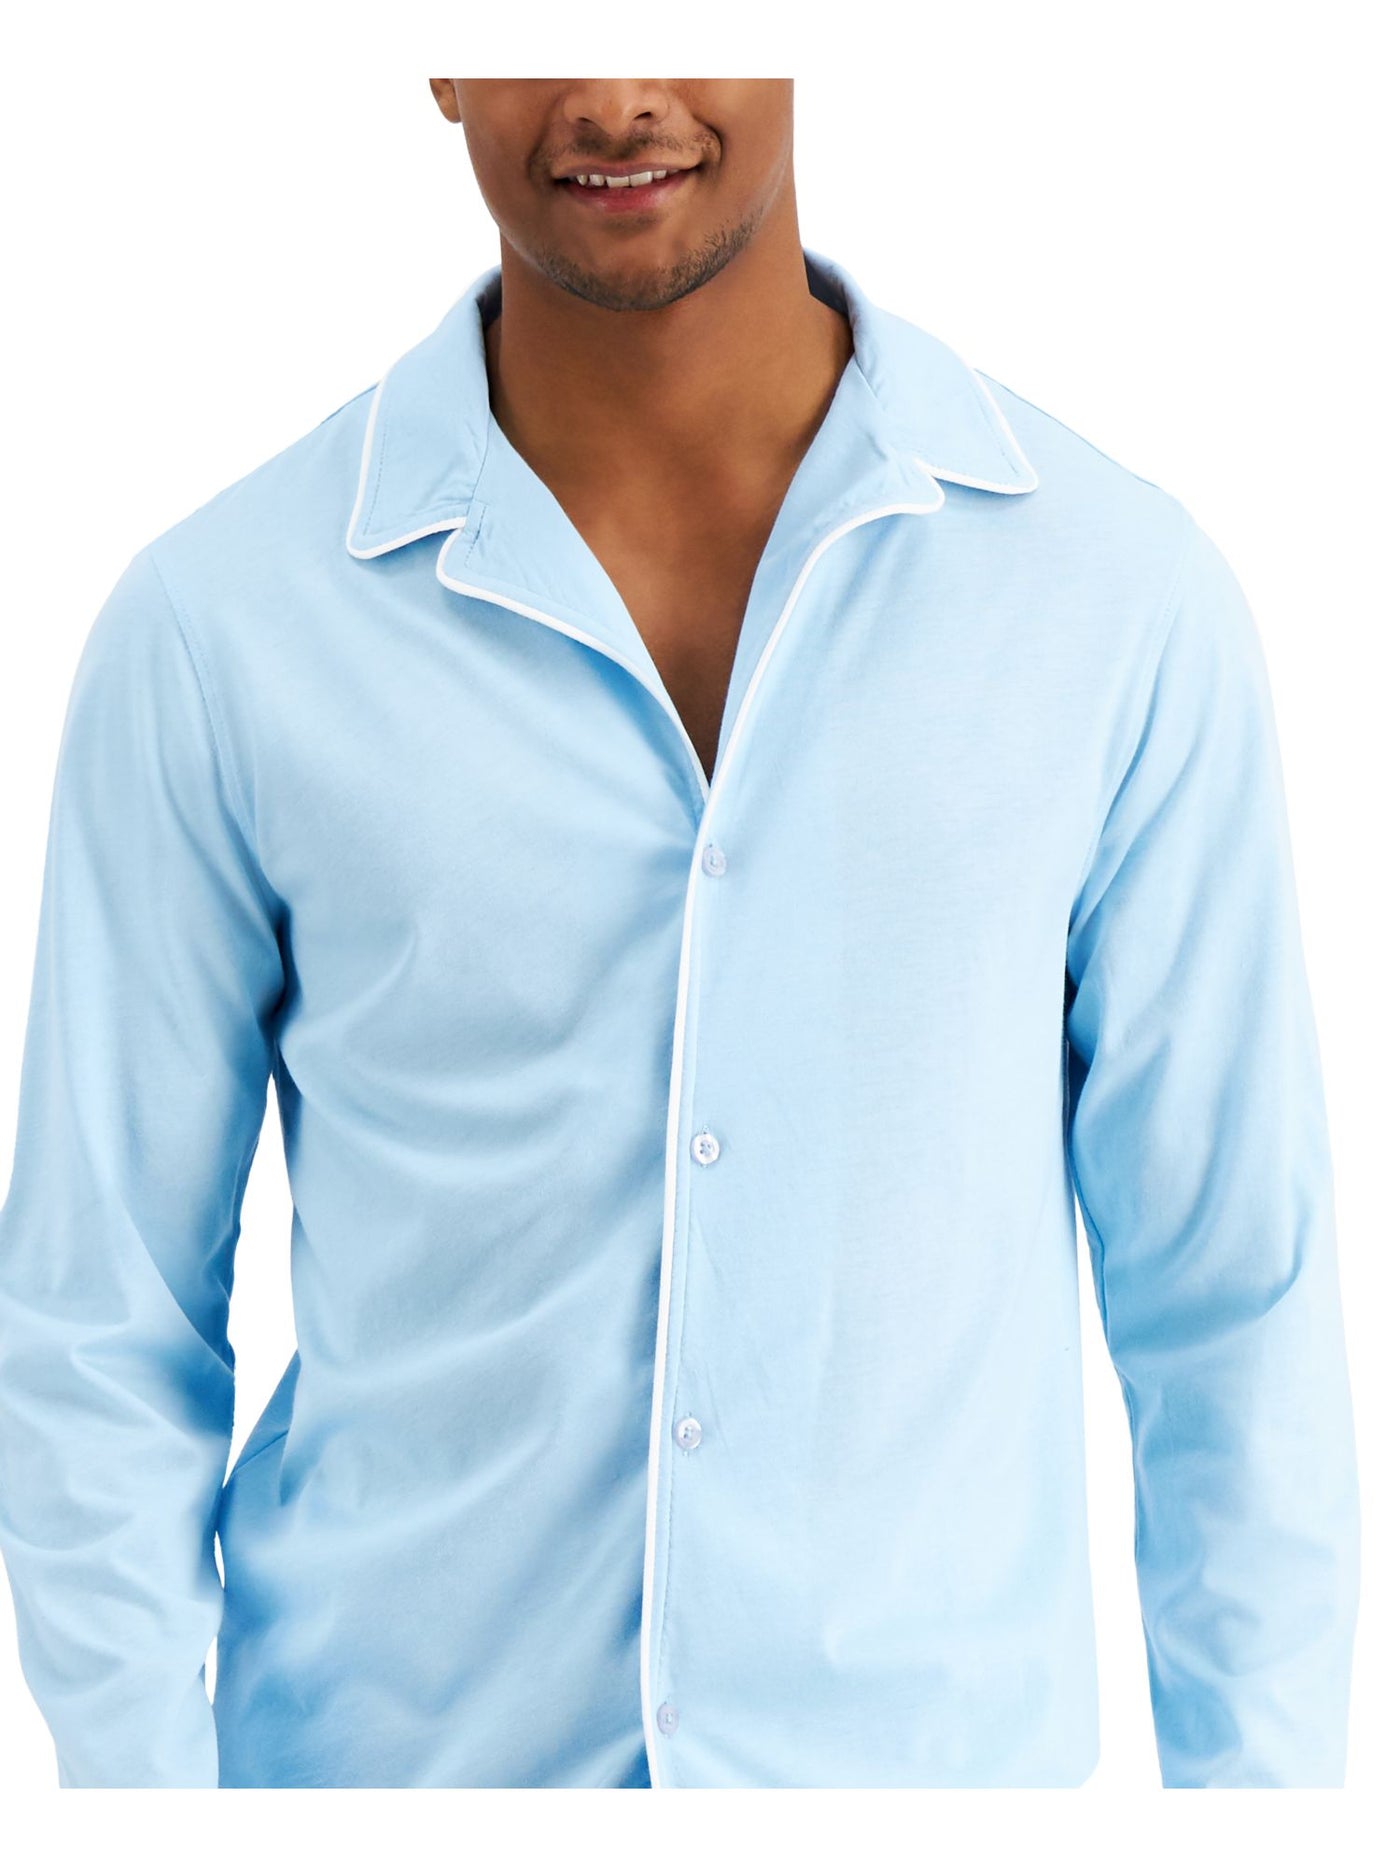 CLUBROOM Intimates Light Blue Notched Collar Sleep Shirt Pajama Top M